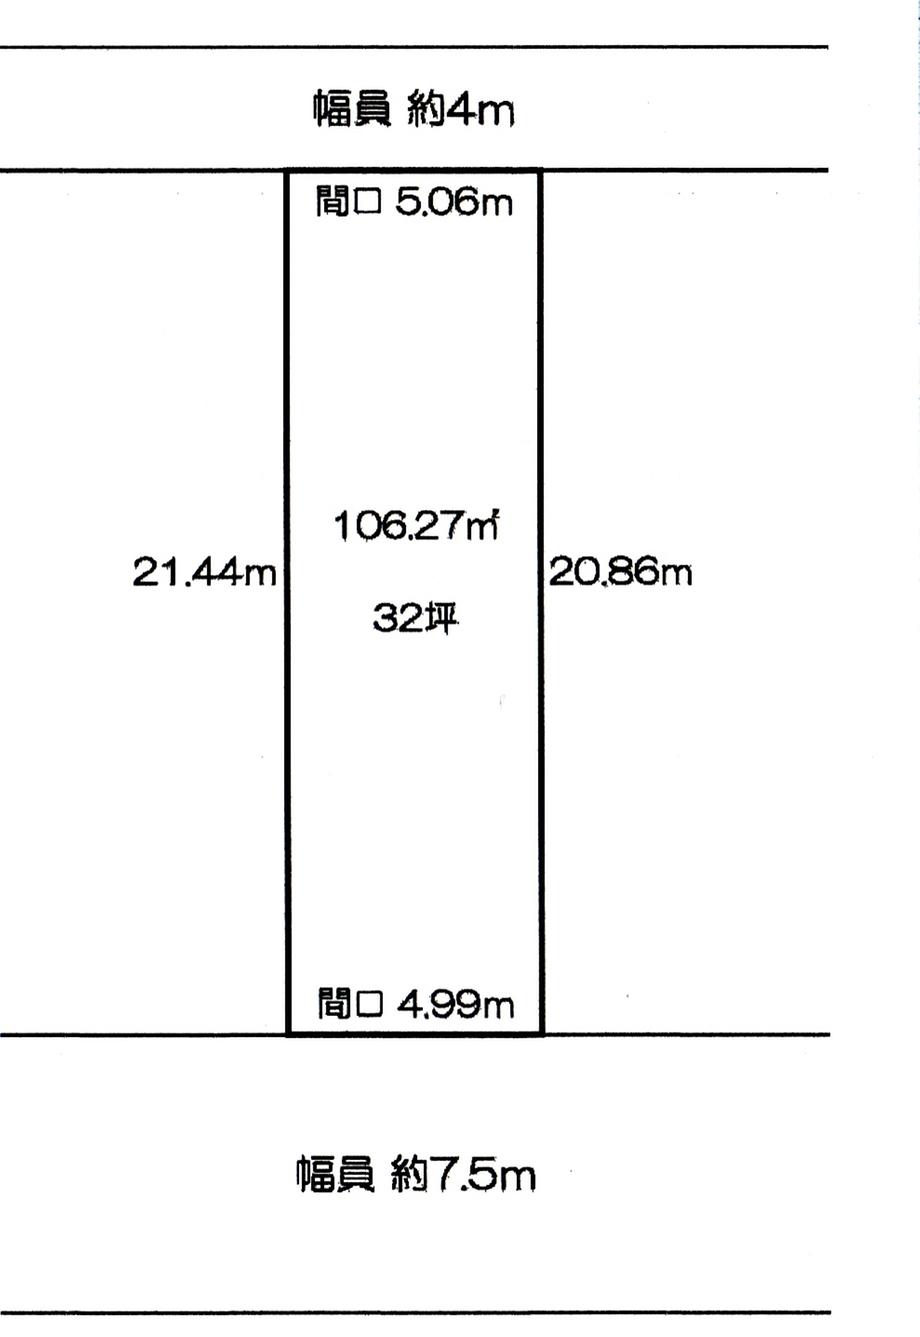 Compartment figure. Land price 20 million yen, Land area 106.27 sq m